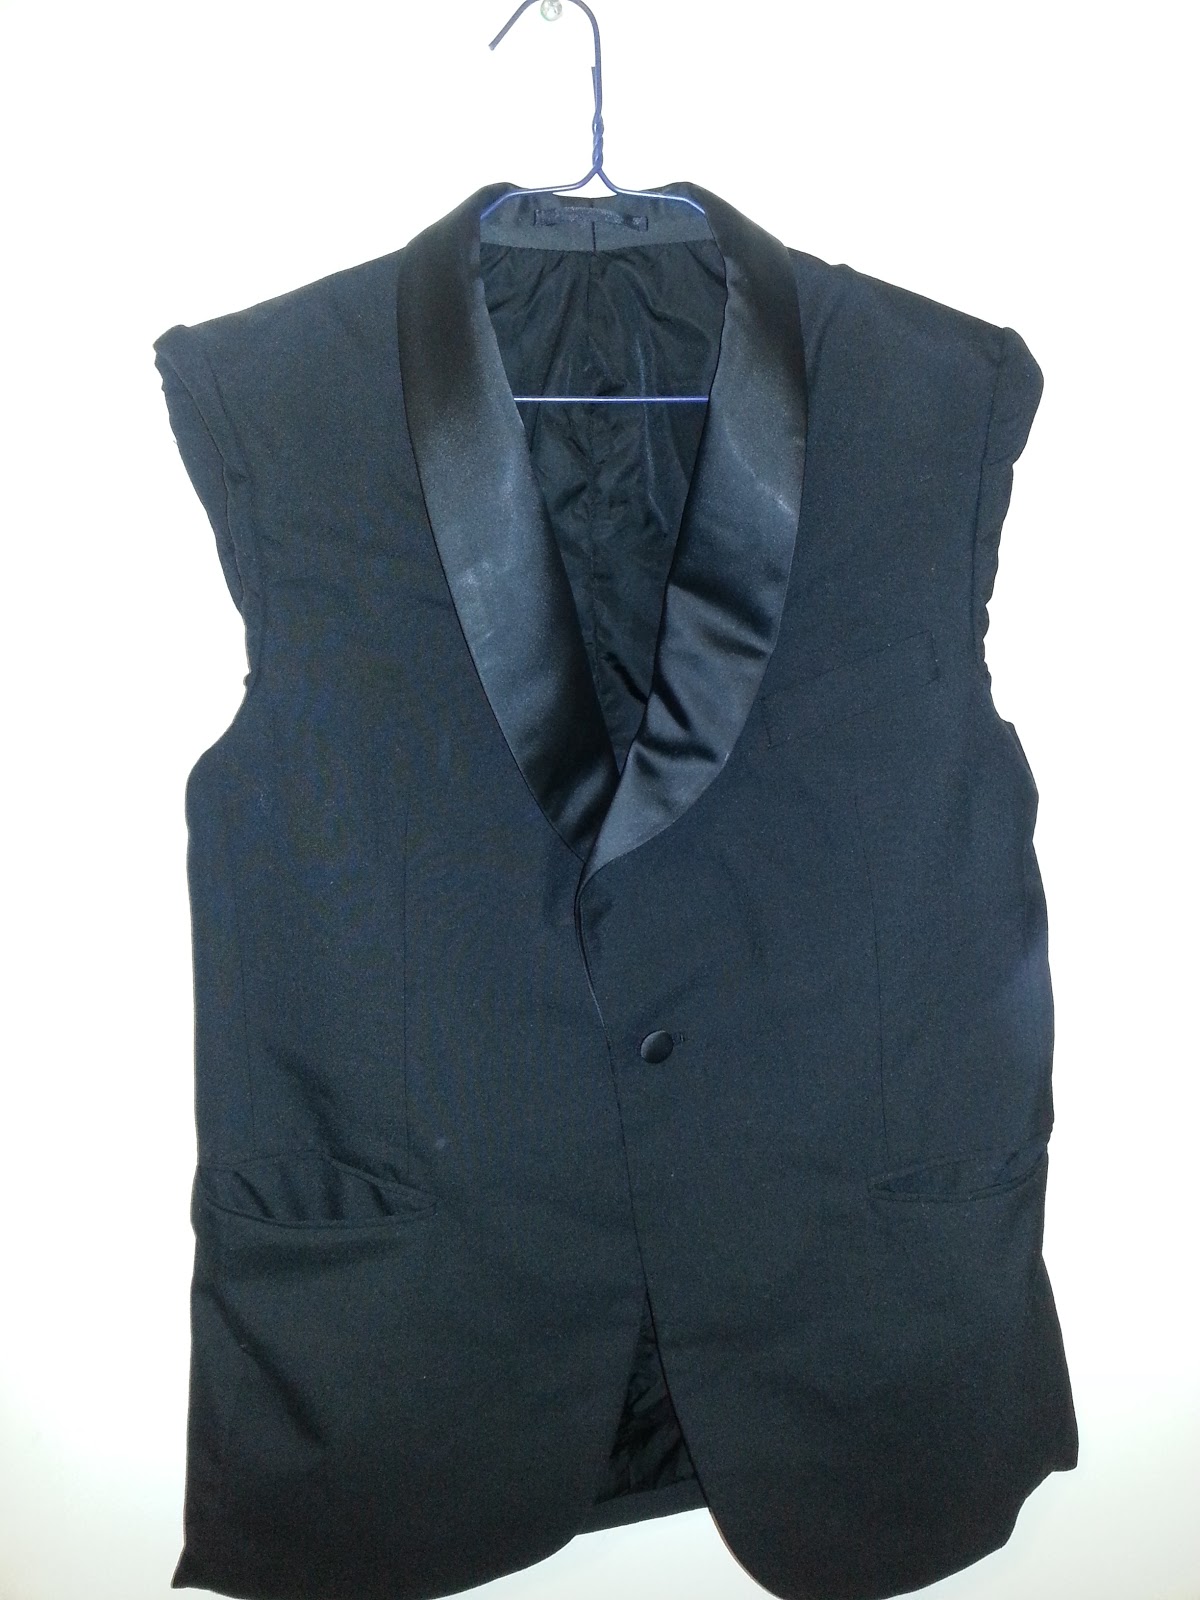 DIY Tuxedo Vest